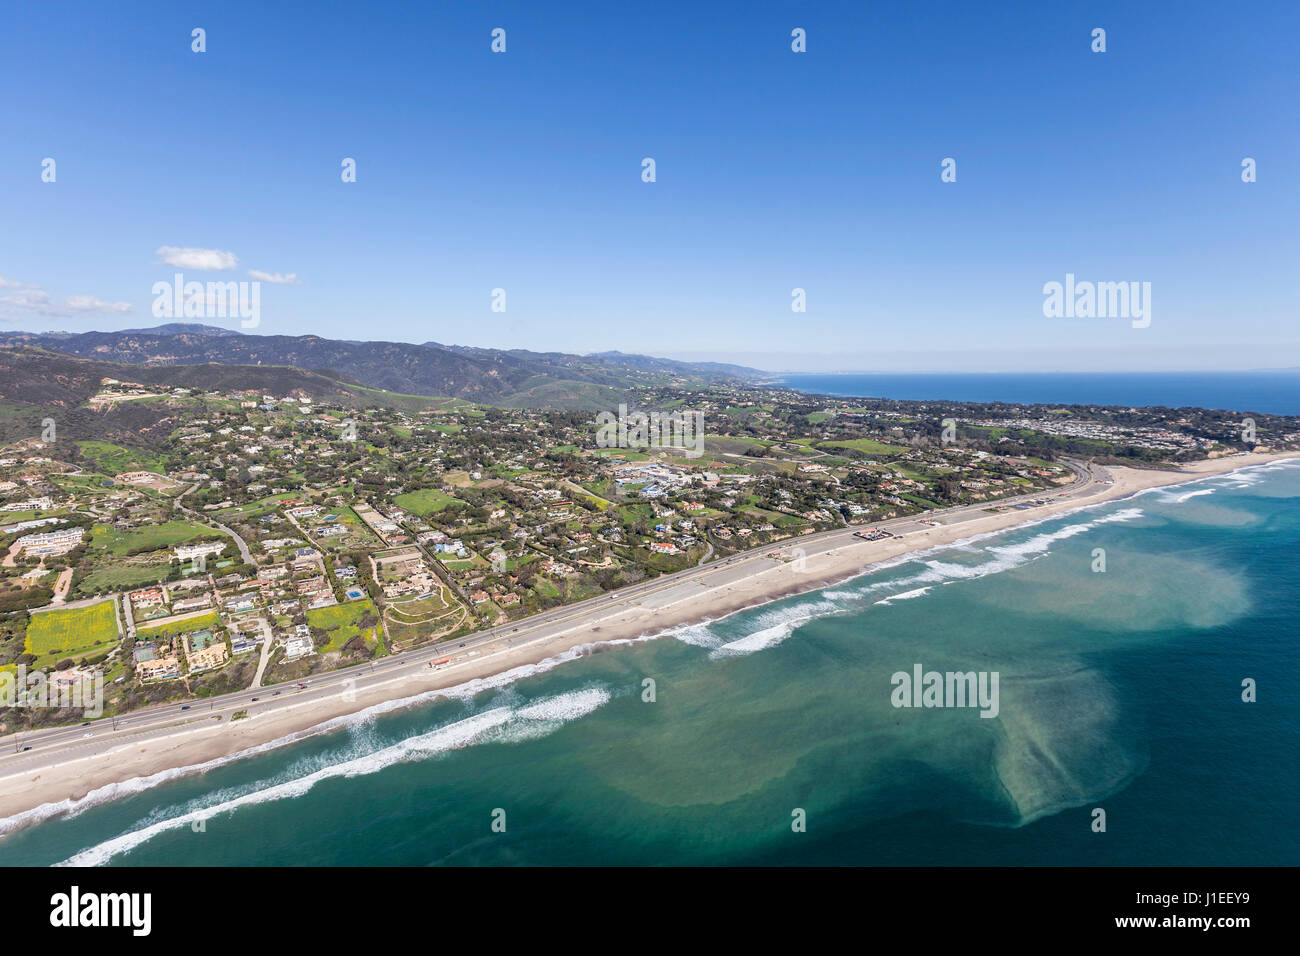 Aerial view of Zuma beach in Malibu, California. Stock Photo